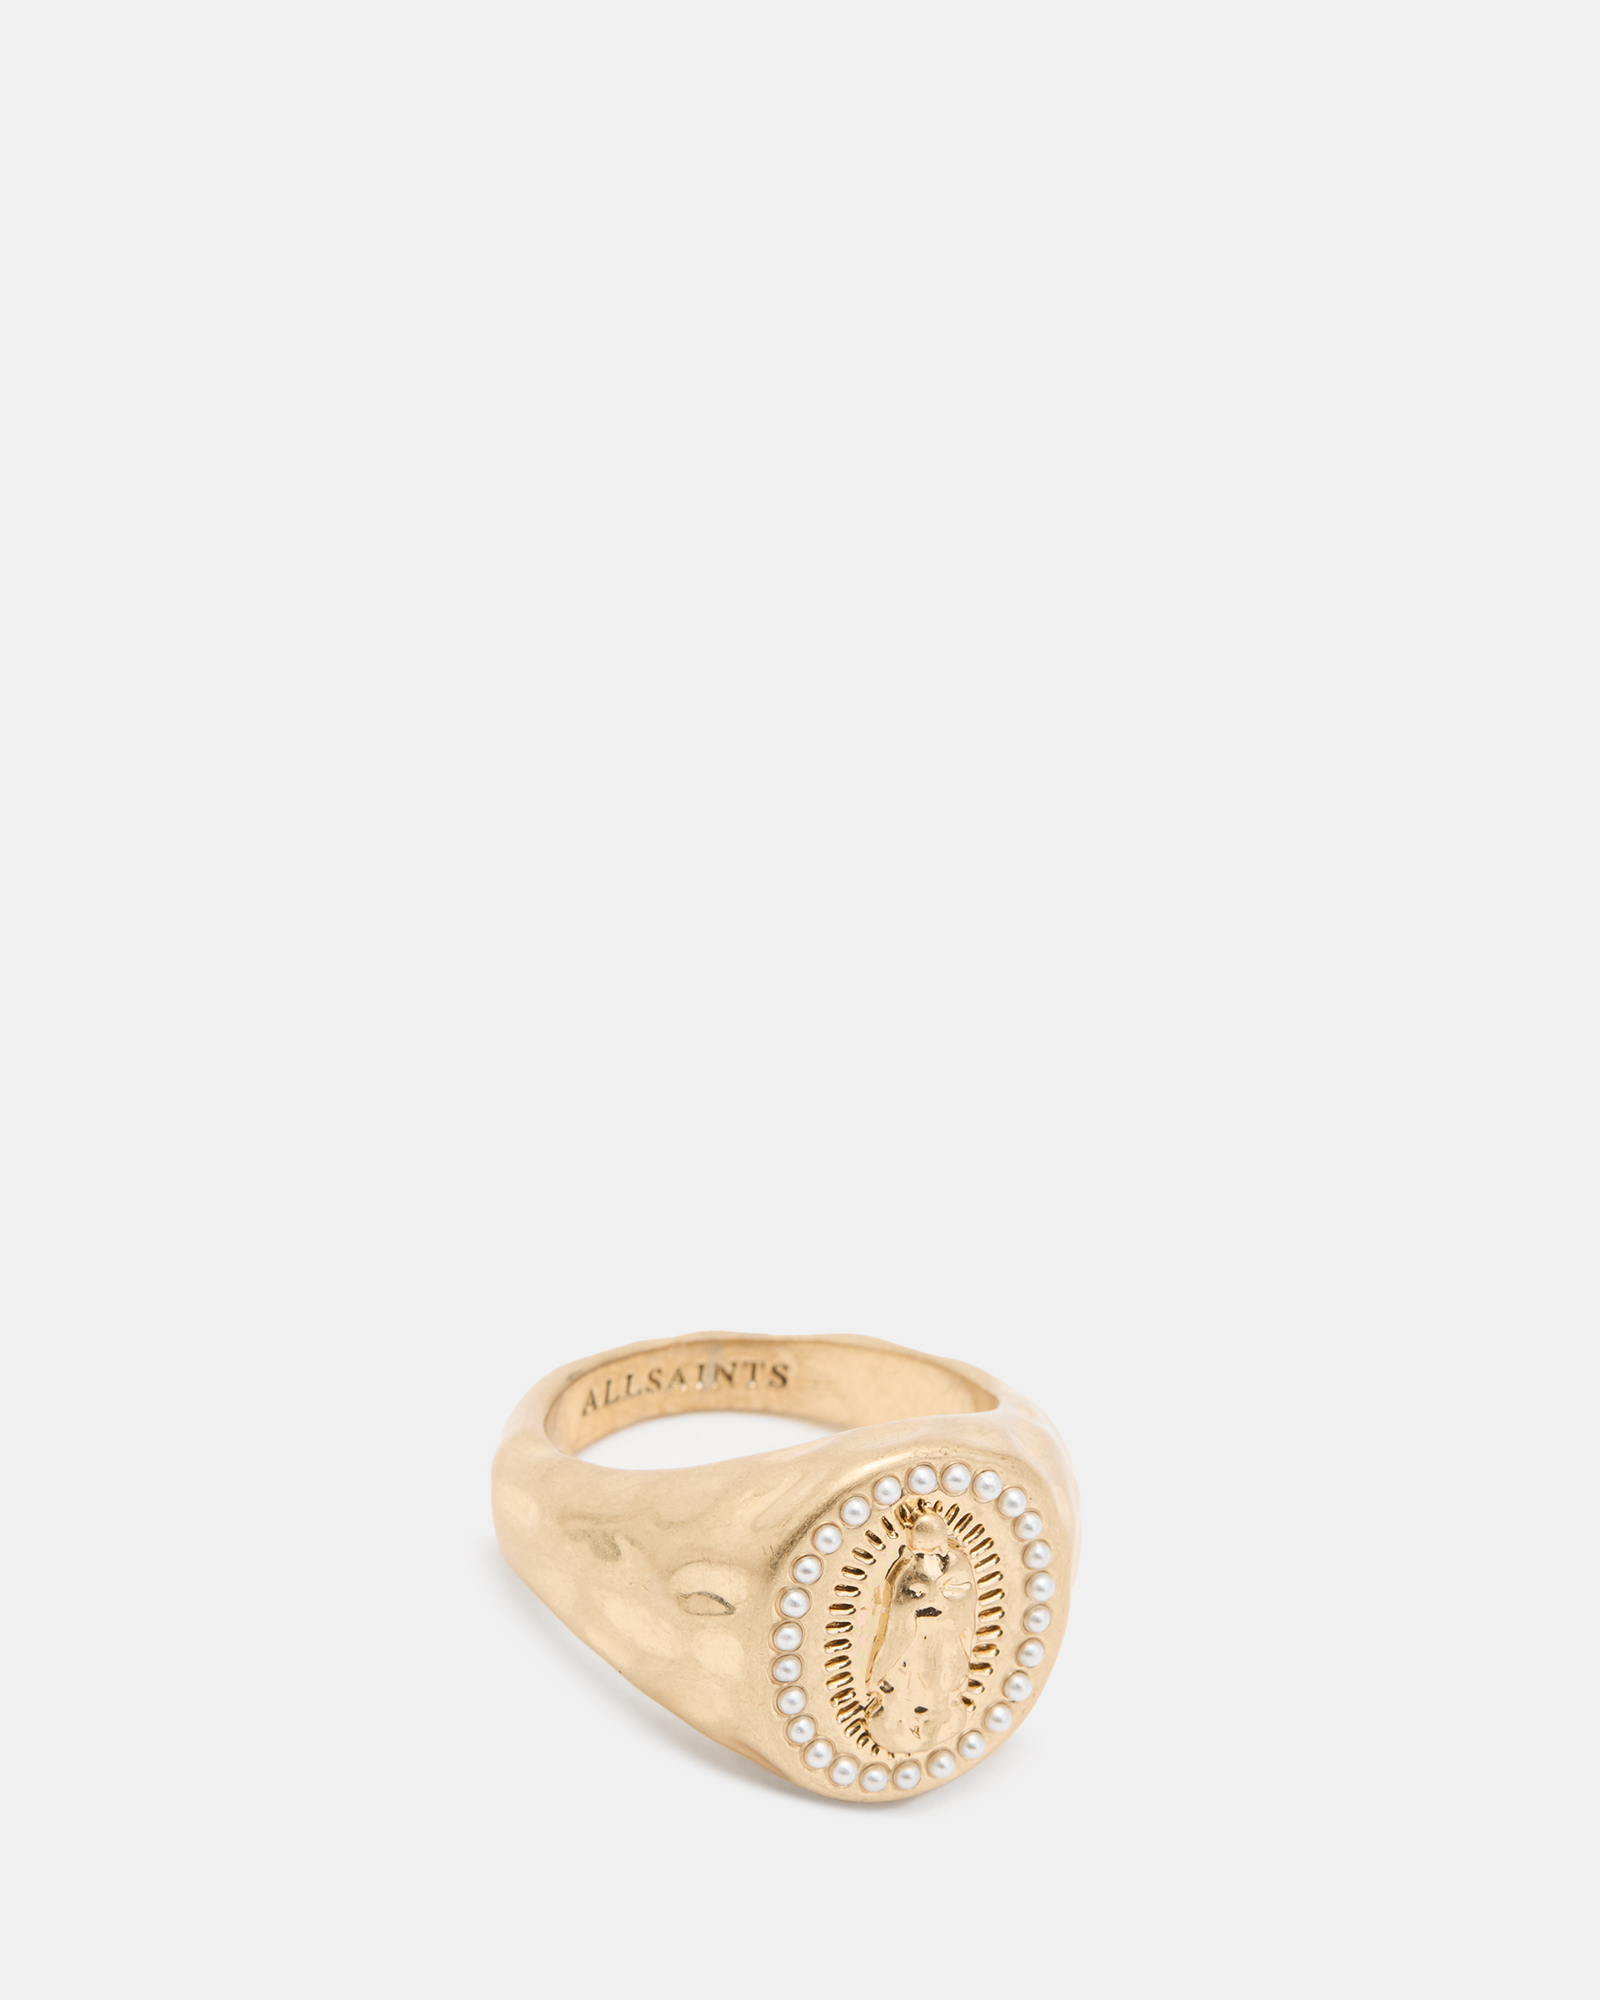 AllSaints Saint Pearl Beaded Ring,, WARM BRASS/WHITE, Size: